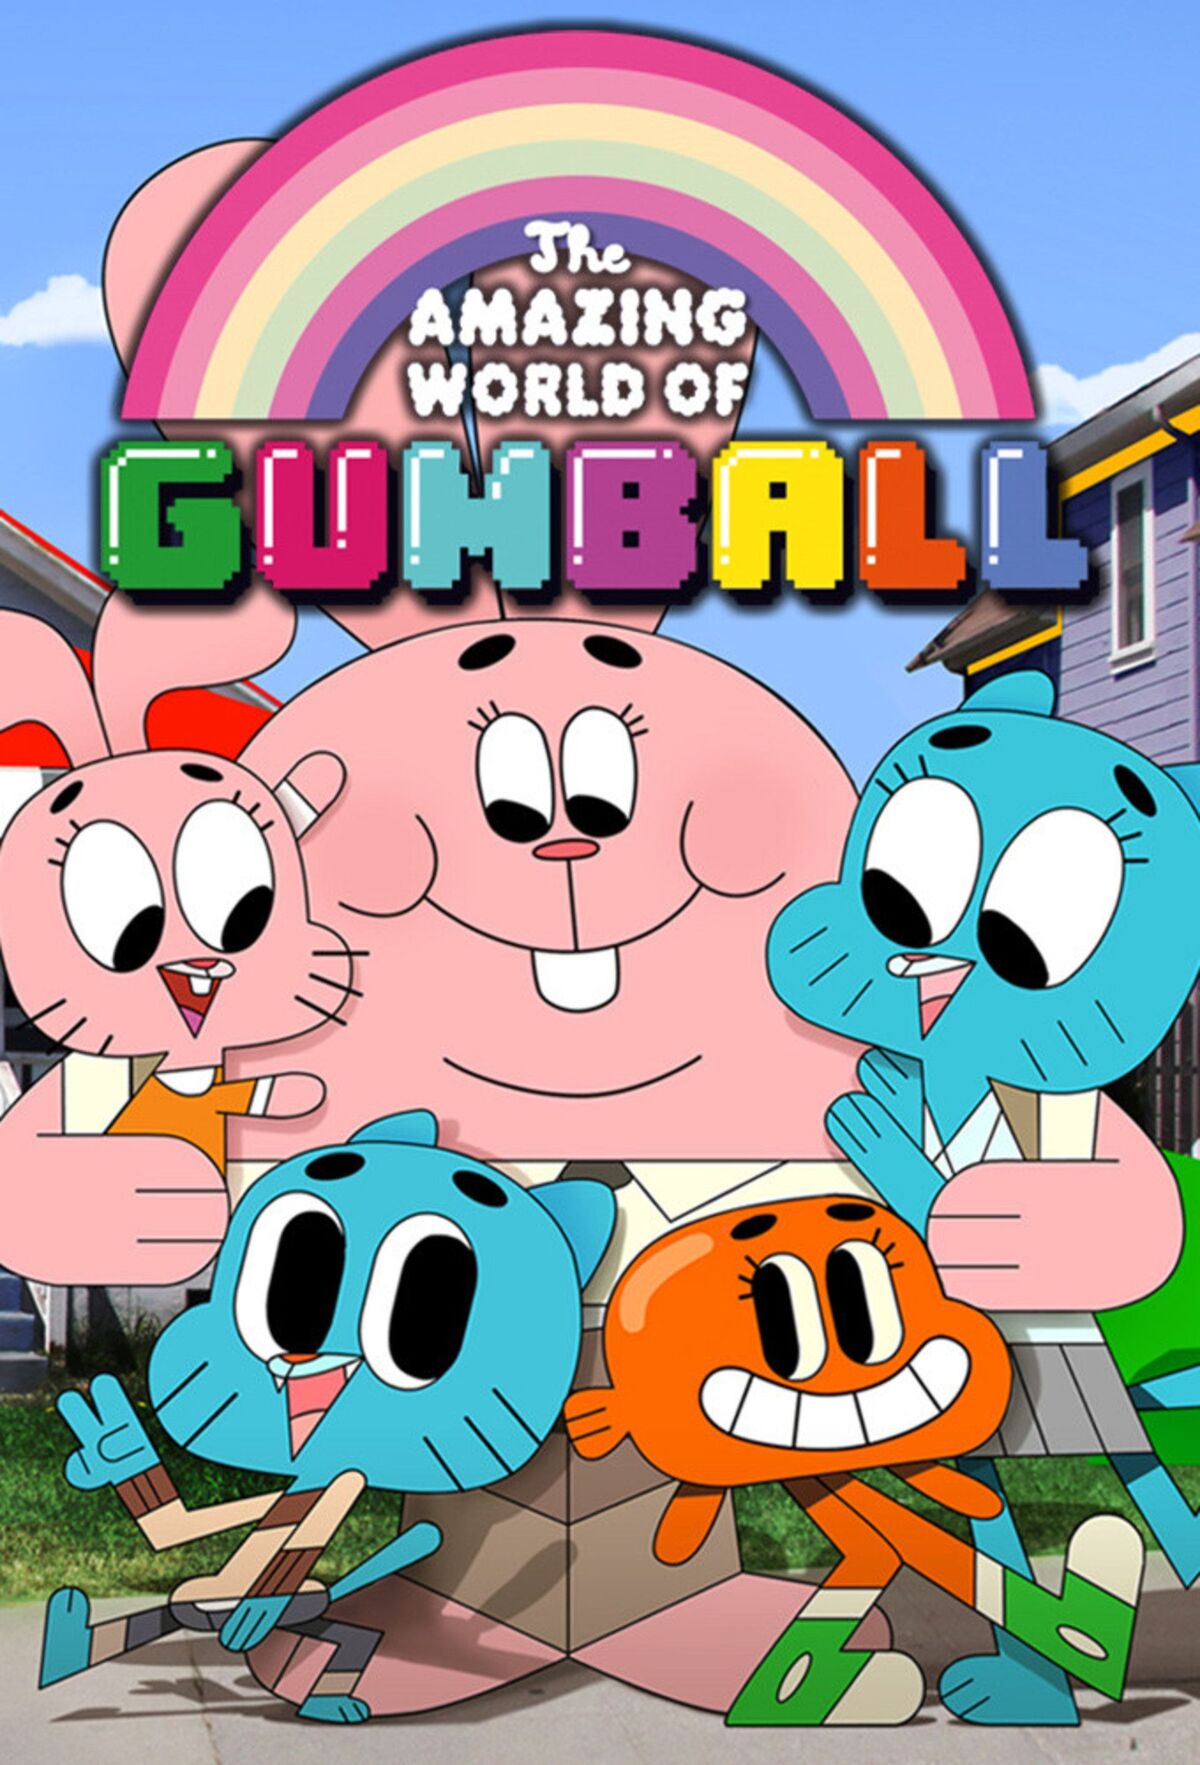 The Amazing World of Gumball The Dream (TV Episode 2013) - IMDb